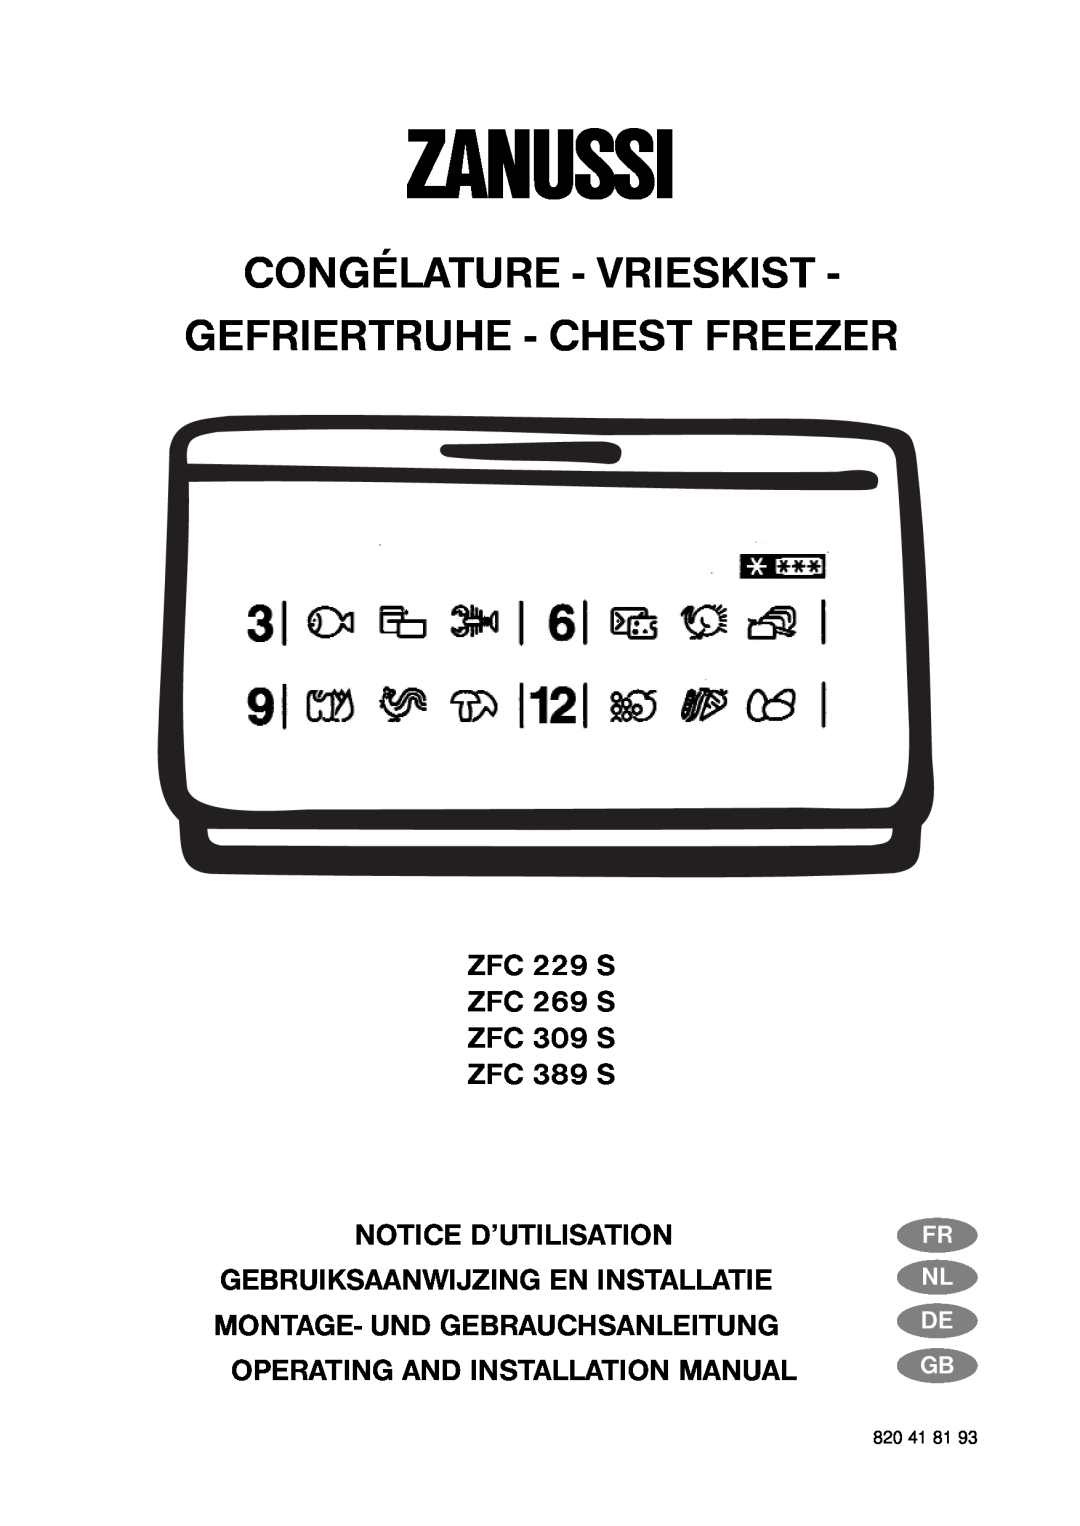 Zanussi ZFC 389 S installation manual Zanussi, Congélature - Vrieskist Gefriertruhe - Chest Freezer, Notice D’Utilisation 